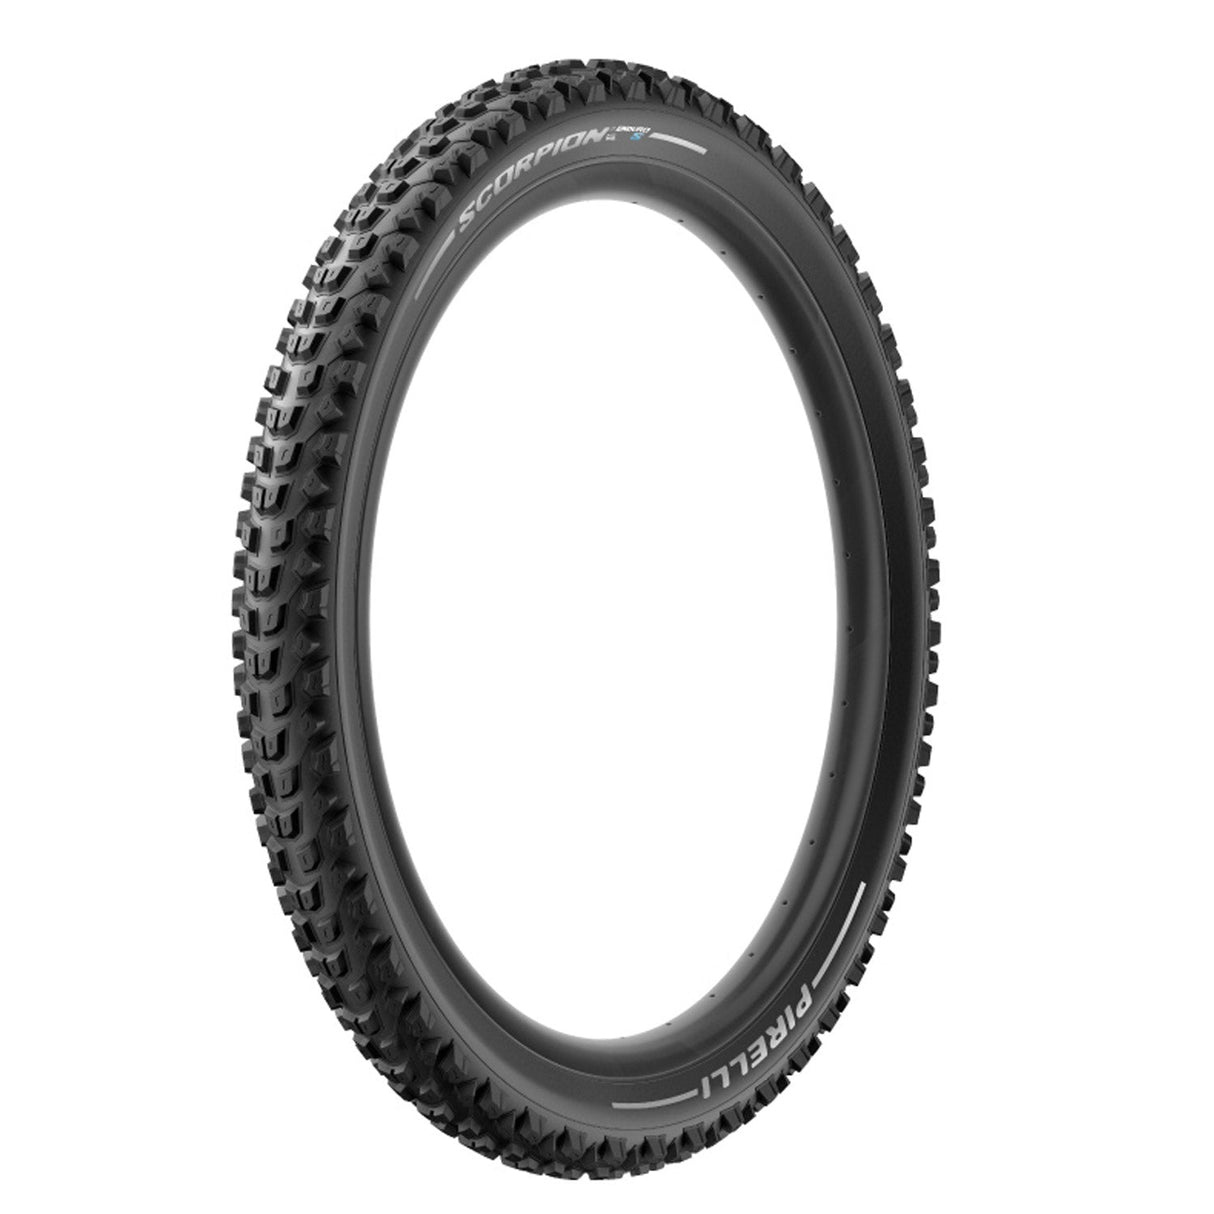 Pirelli Scorpion Enduro S 27.5" MTB Tyre